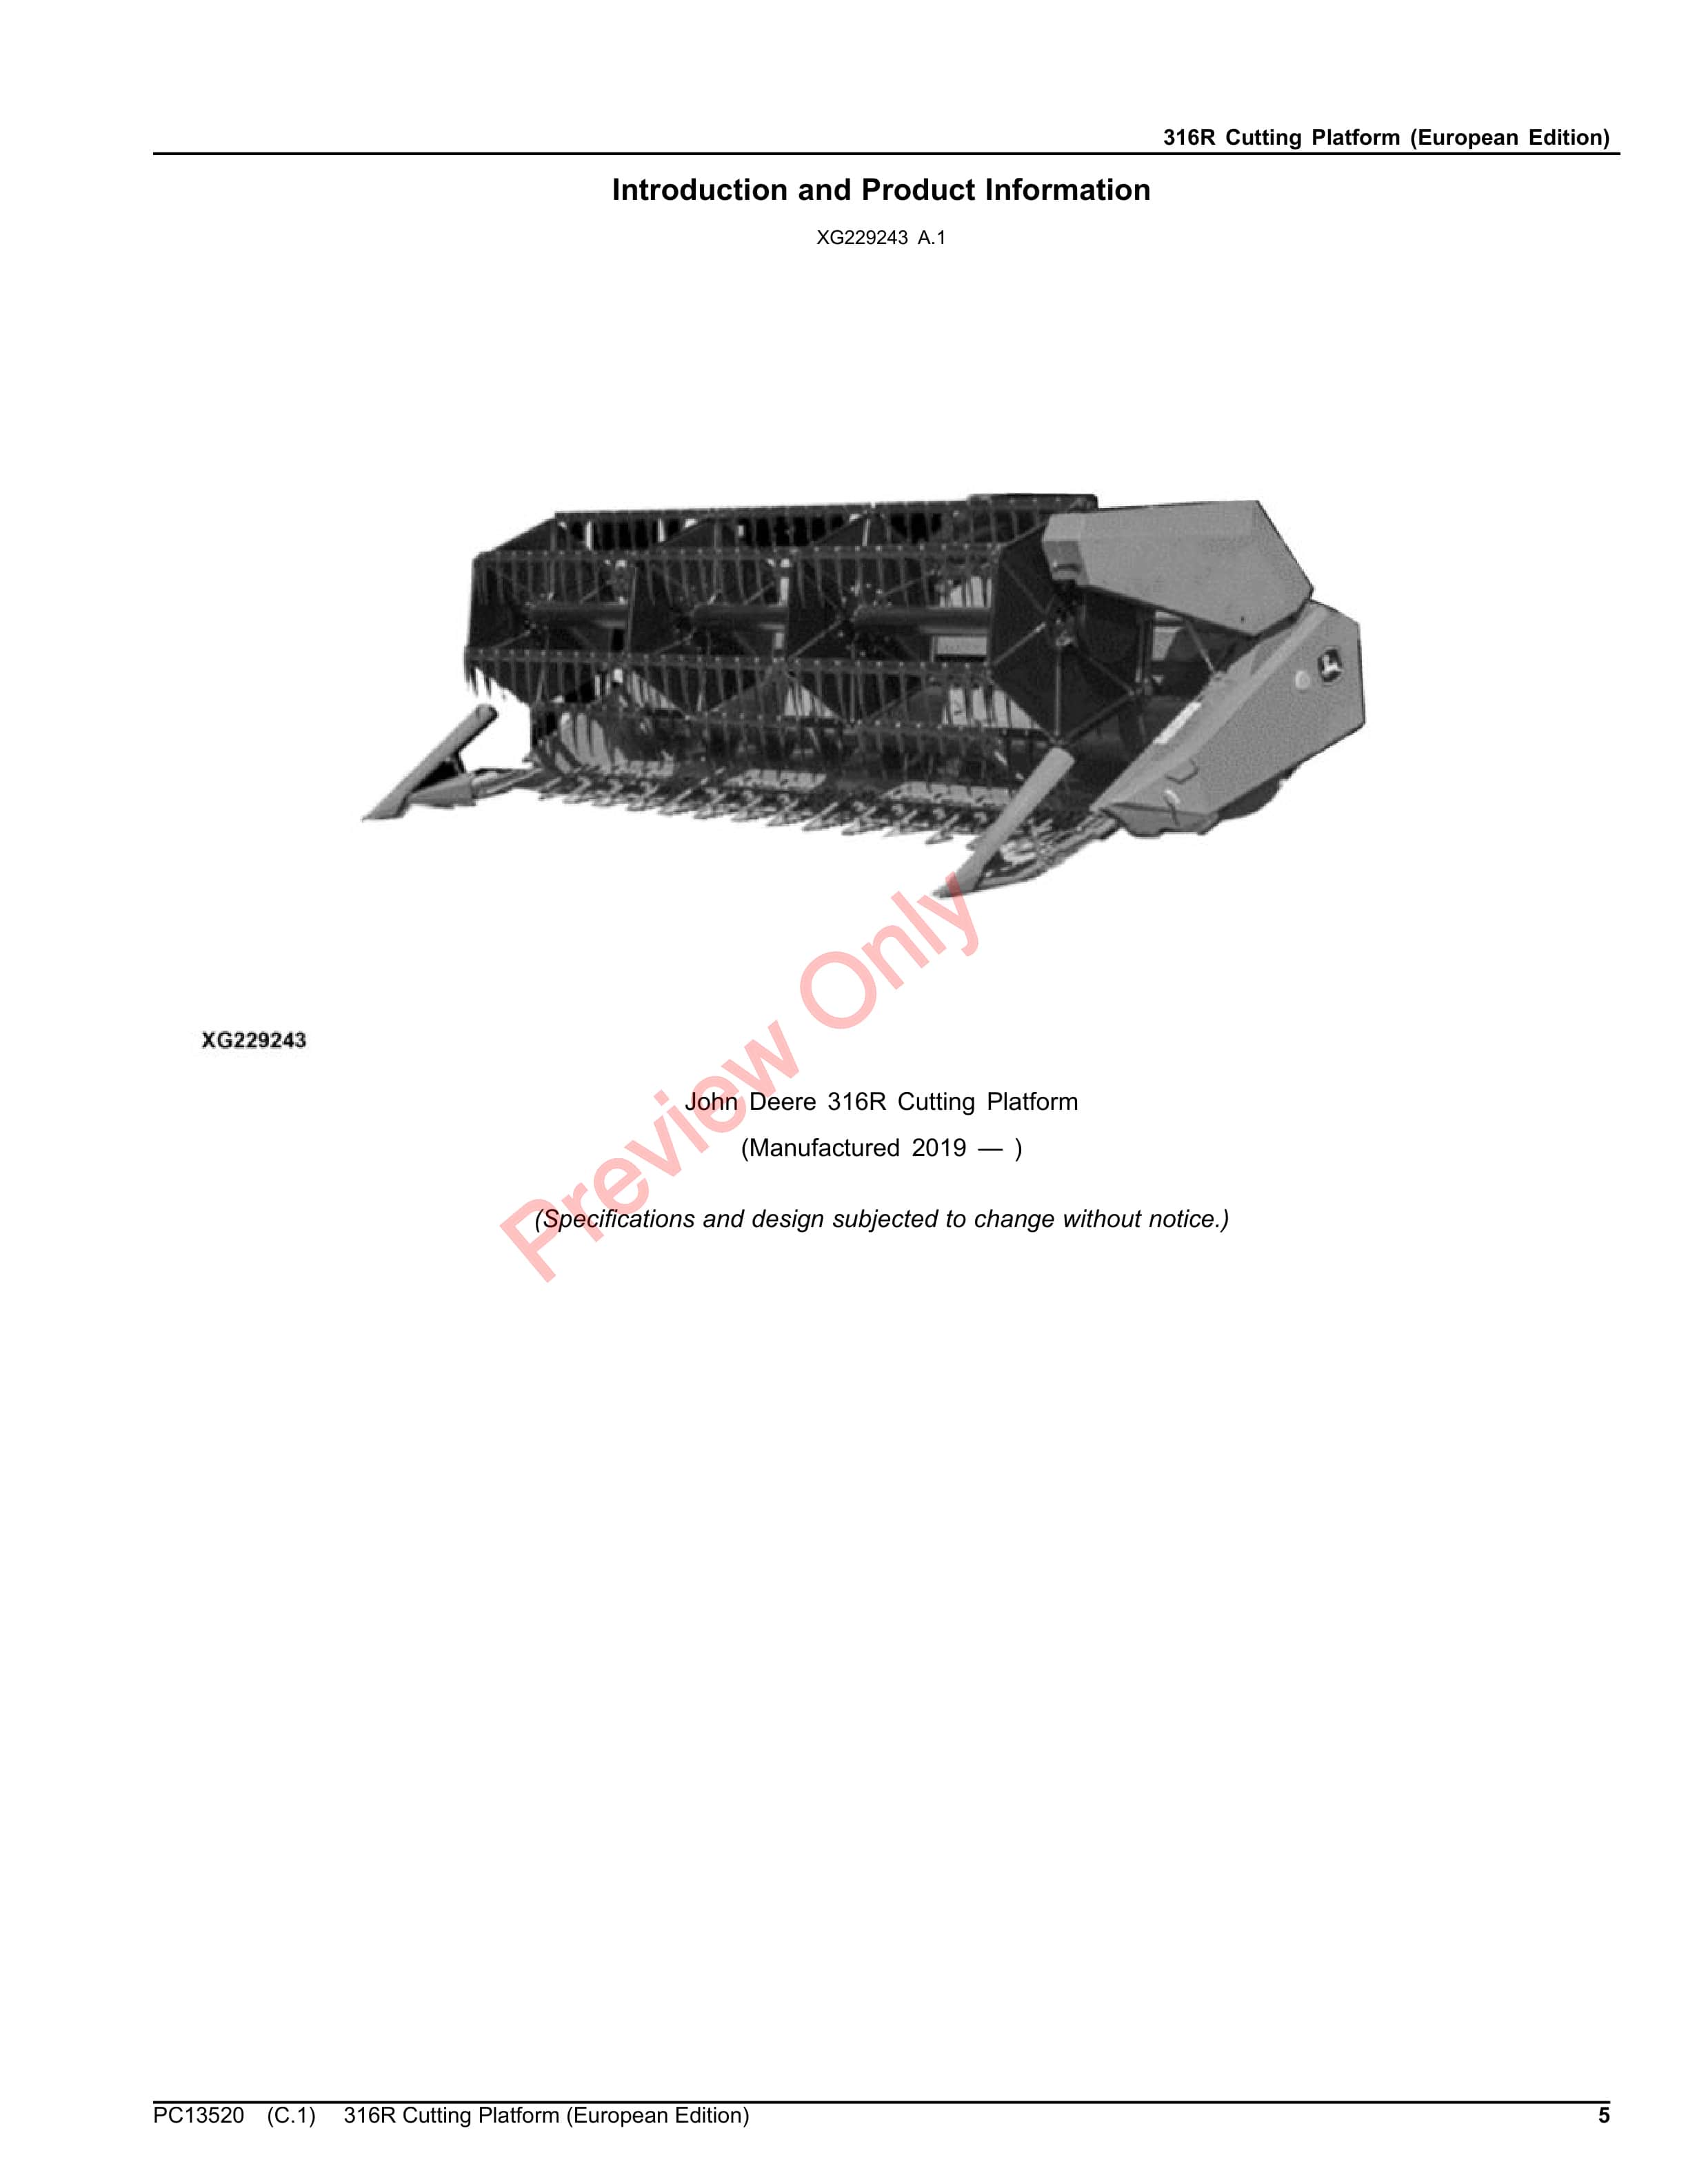 John Deere 316R Cutting Platform Parts Catalog PC13520 16DEC20-5